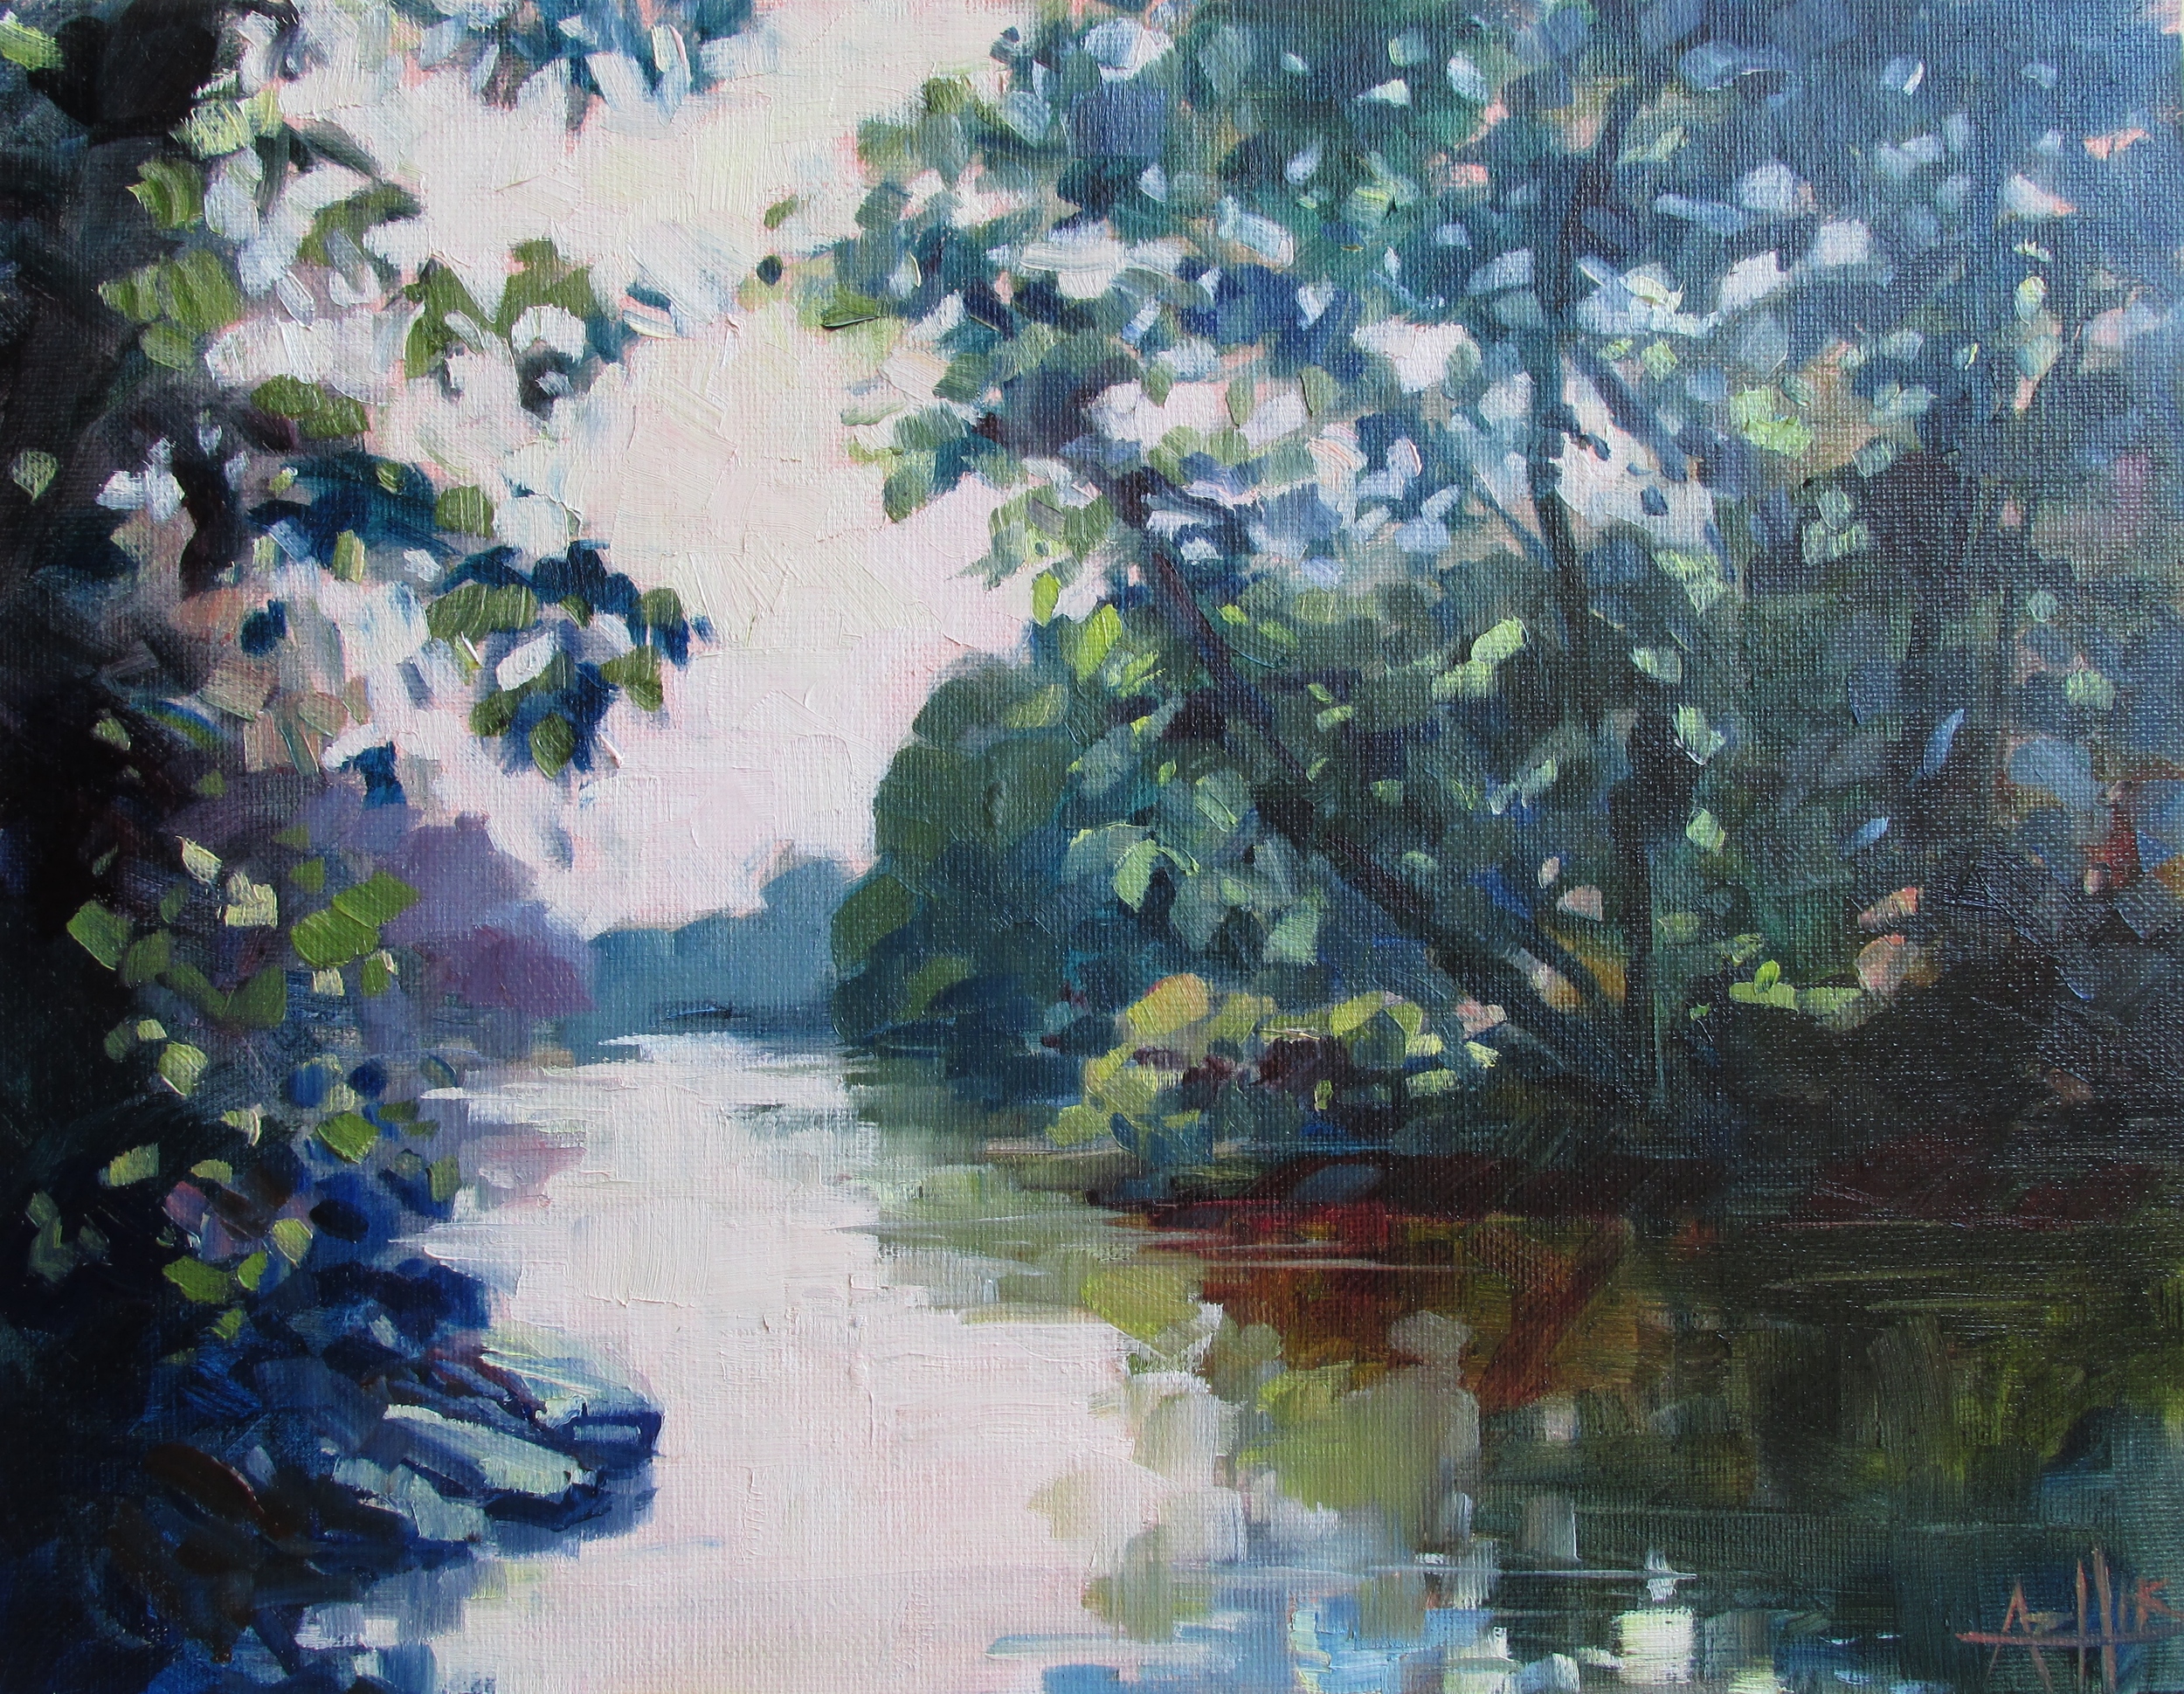 SOLD "White River Shadows" Copyright 2014 Hirschten, Oil on Canvas 11" x 14"